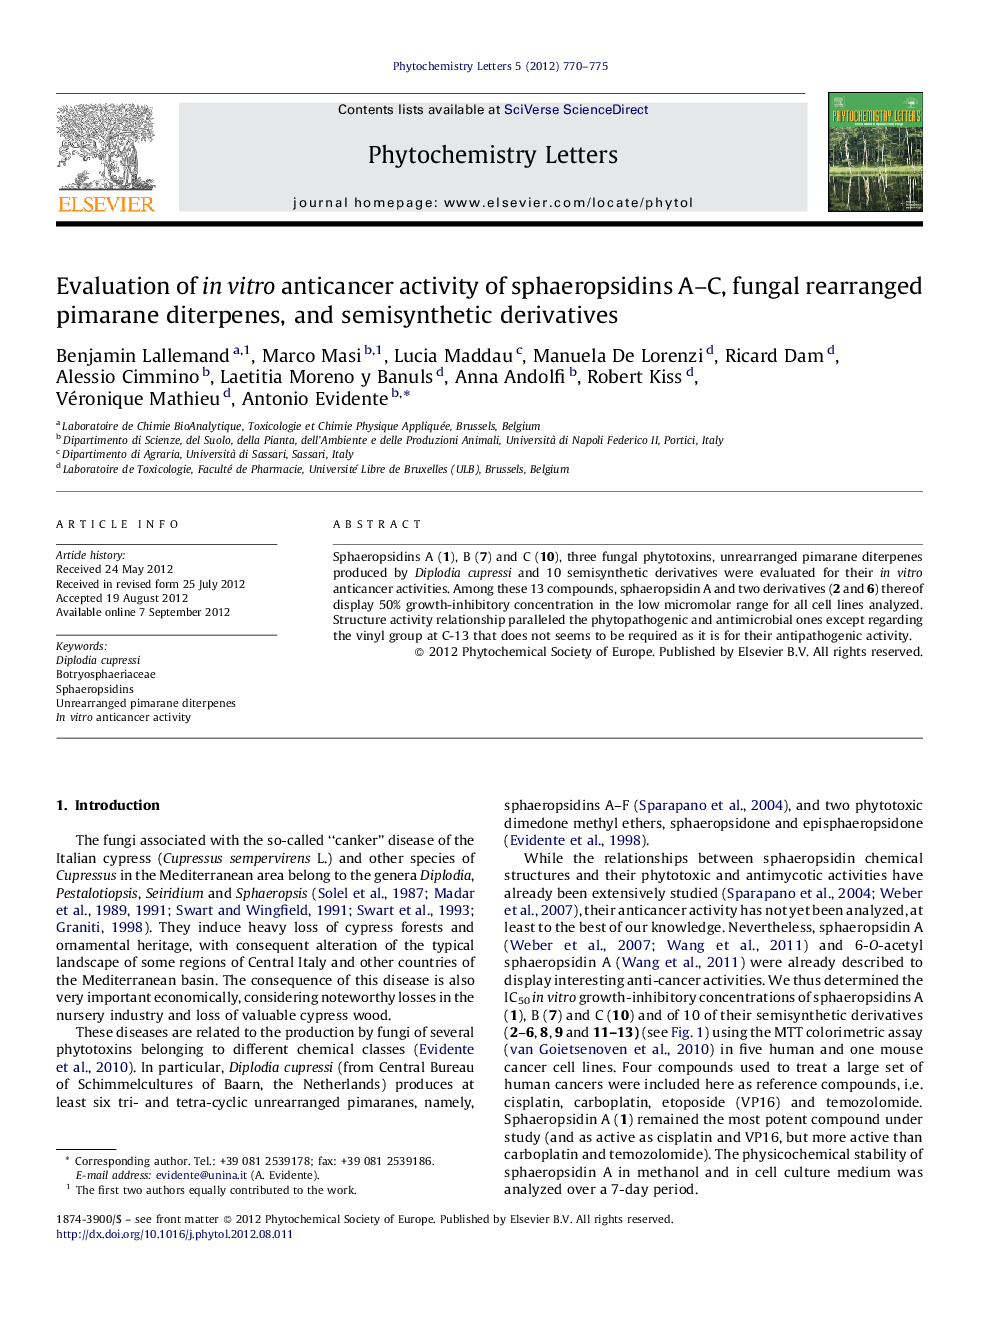 Evaluation of in vitro anticancer activity of sphaeropsidins A-C, fungal rearranged pimarane diterpenes, and semisynthetic derivatives